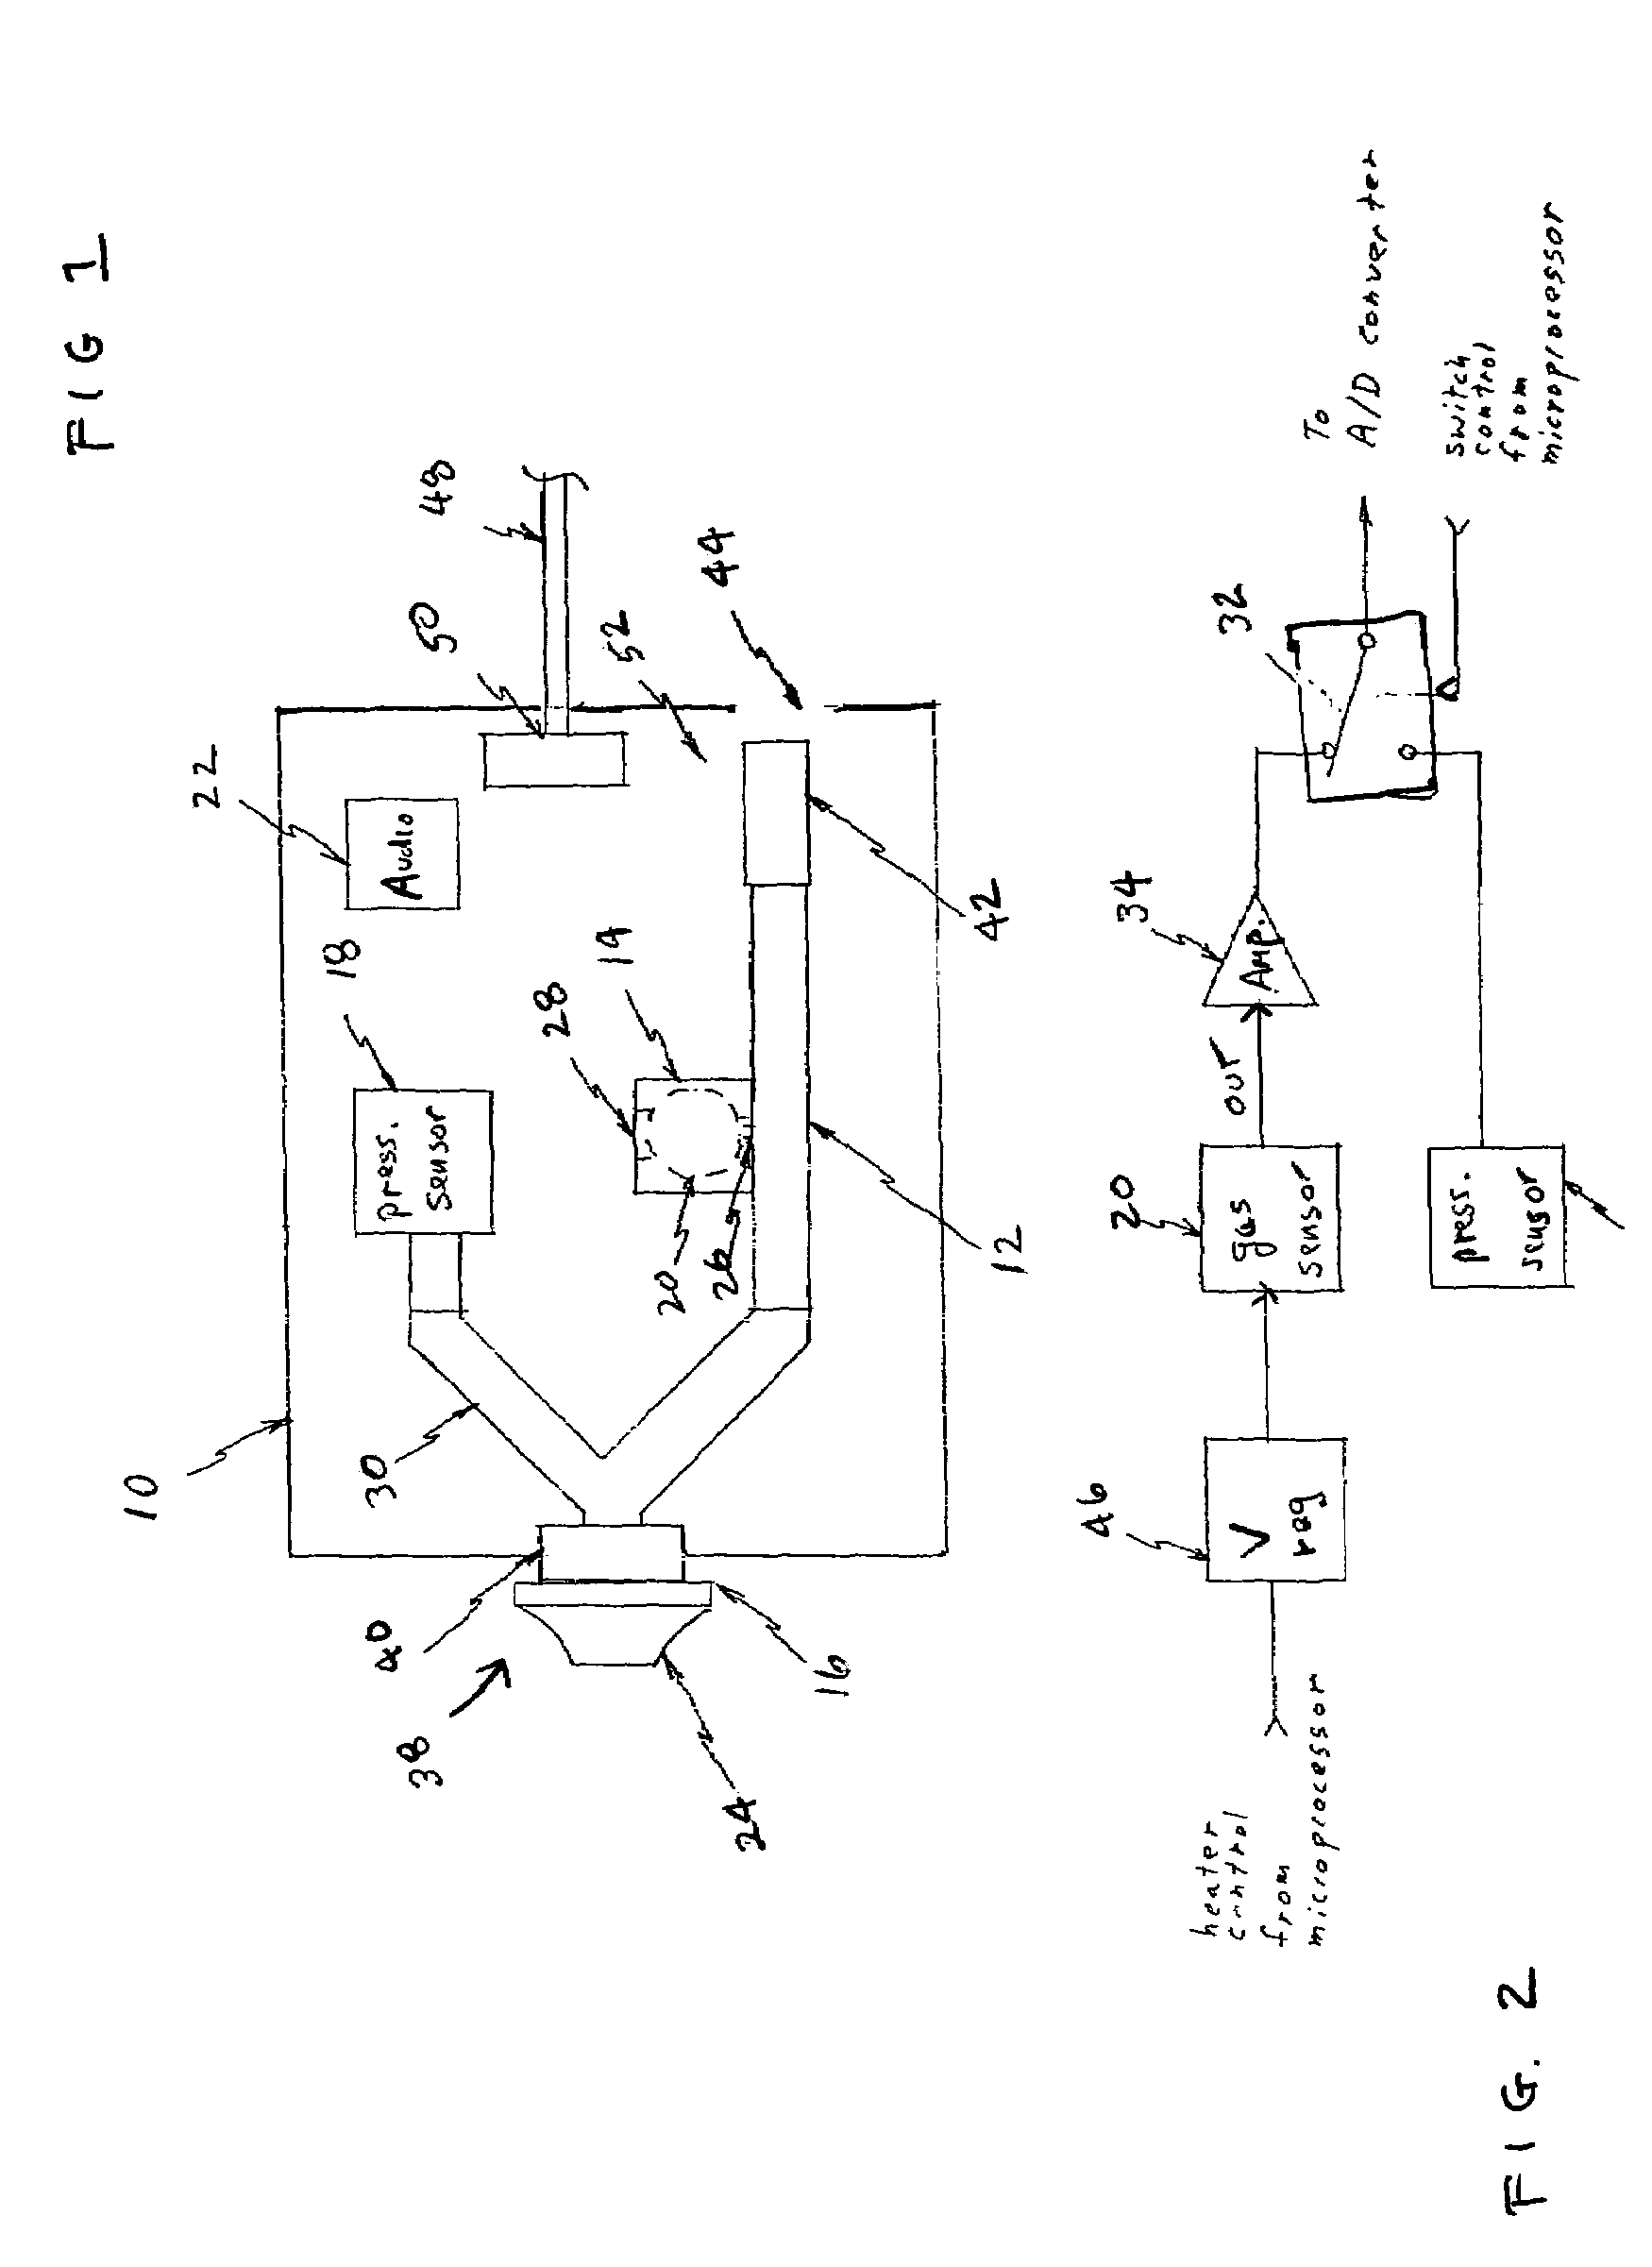 Ignition interlock device and method